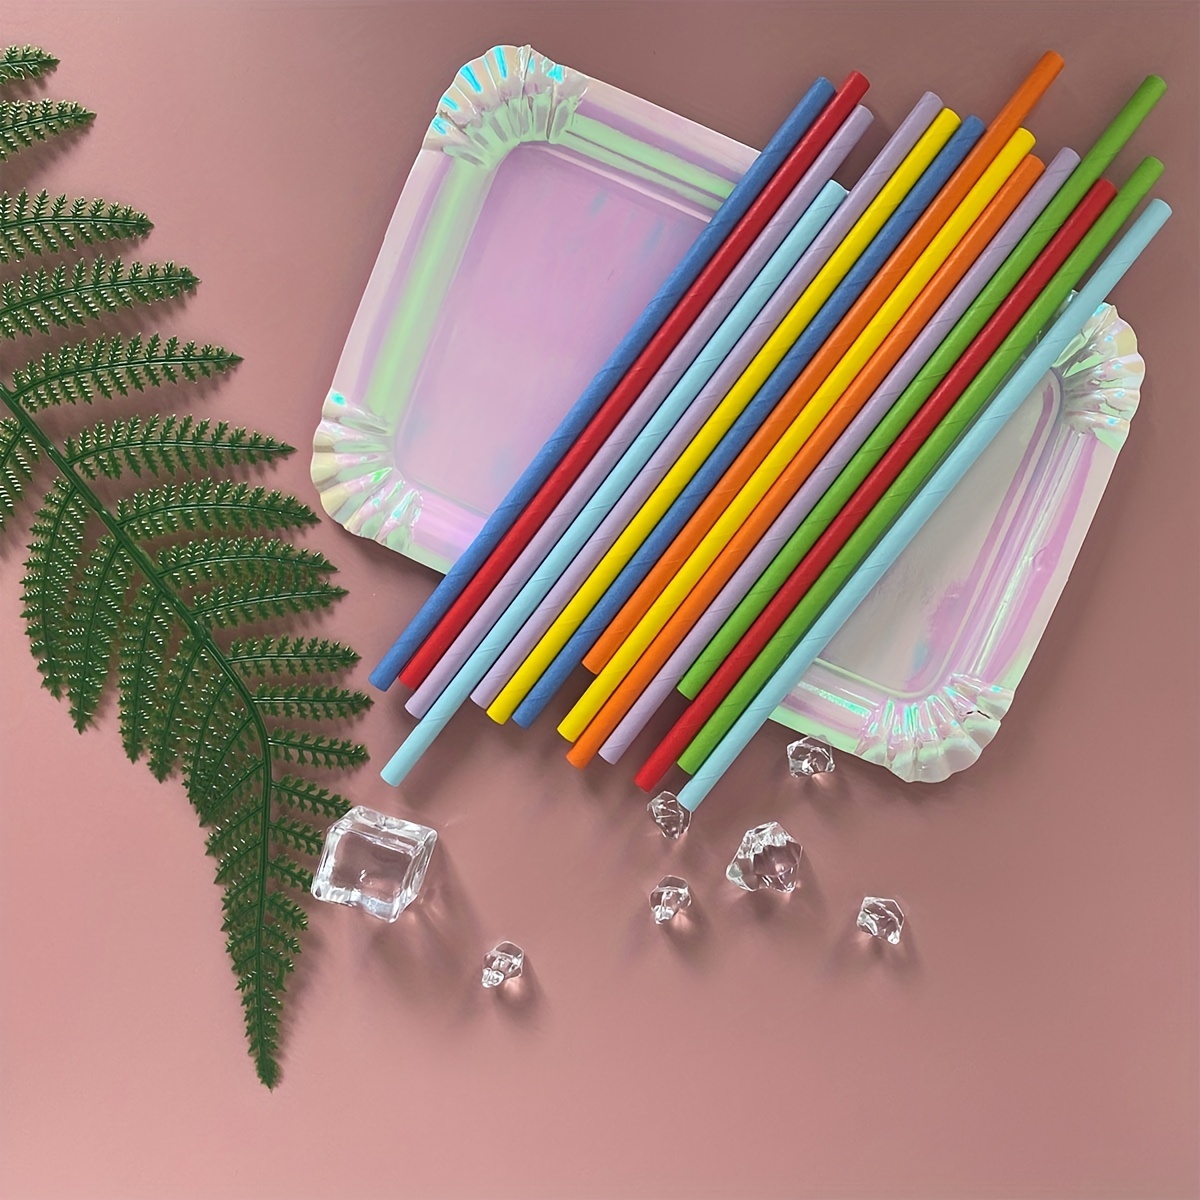 50Pcs Reusable Plastic Straws,Colorful Glitter Straws for 40/30/24